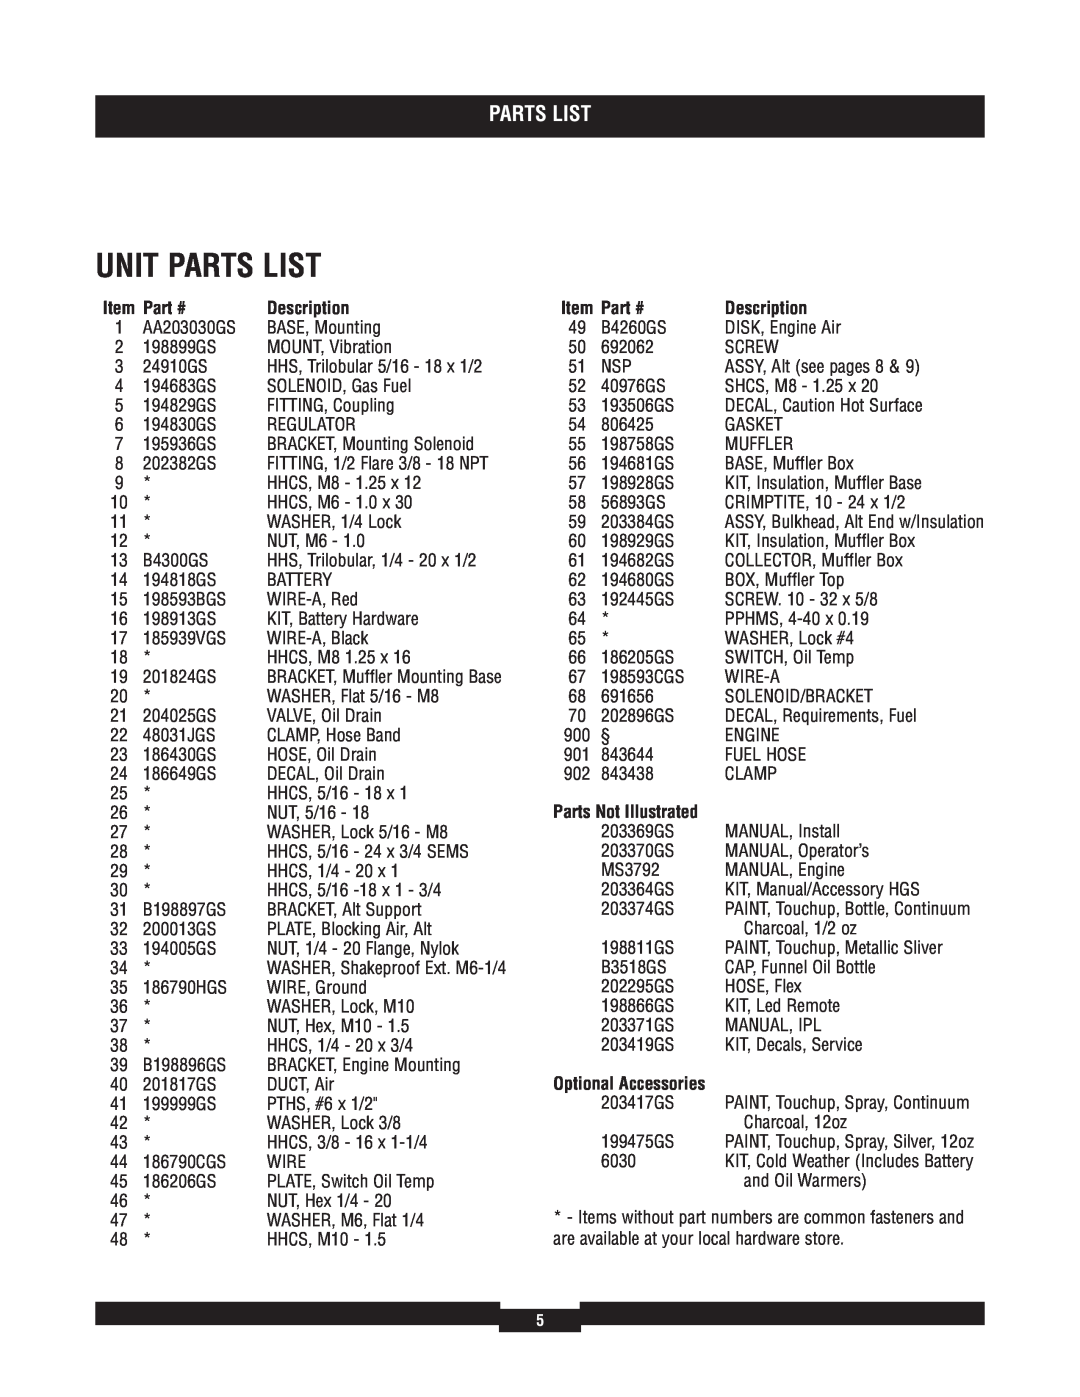 Briggs & Stratton 40273 manual Unit Parts List, Description, Parts Not Illustrated 